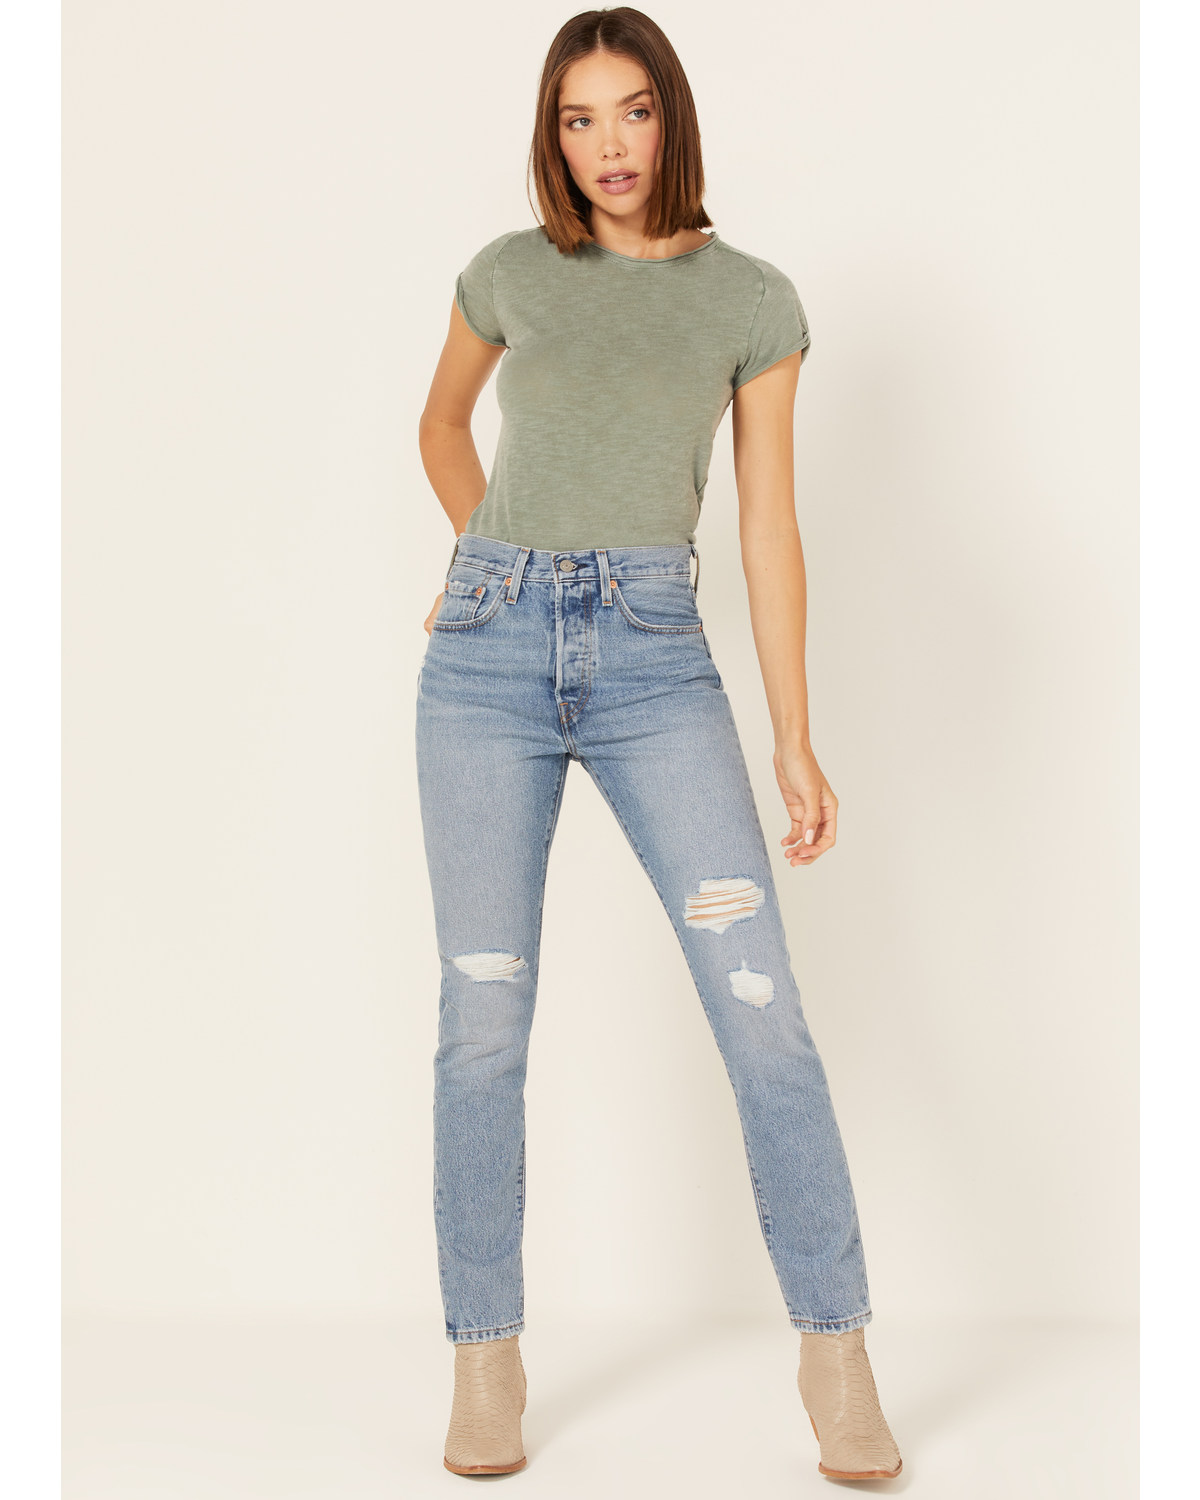 Levi's Women's 501 Medium Wash Mid Rise Distressed Skinny Jeans